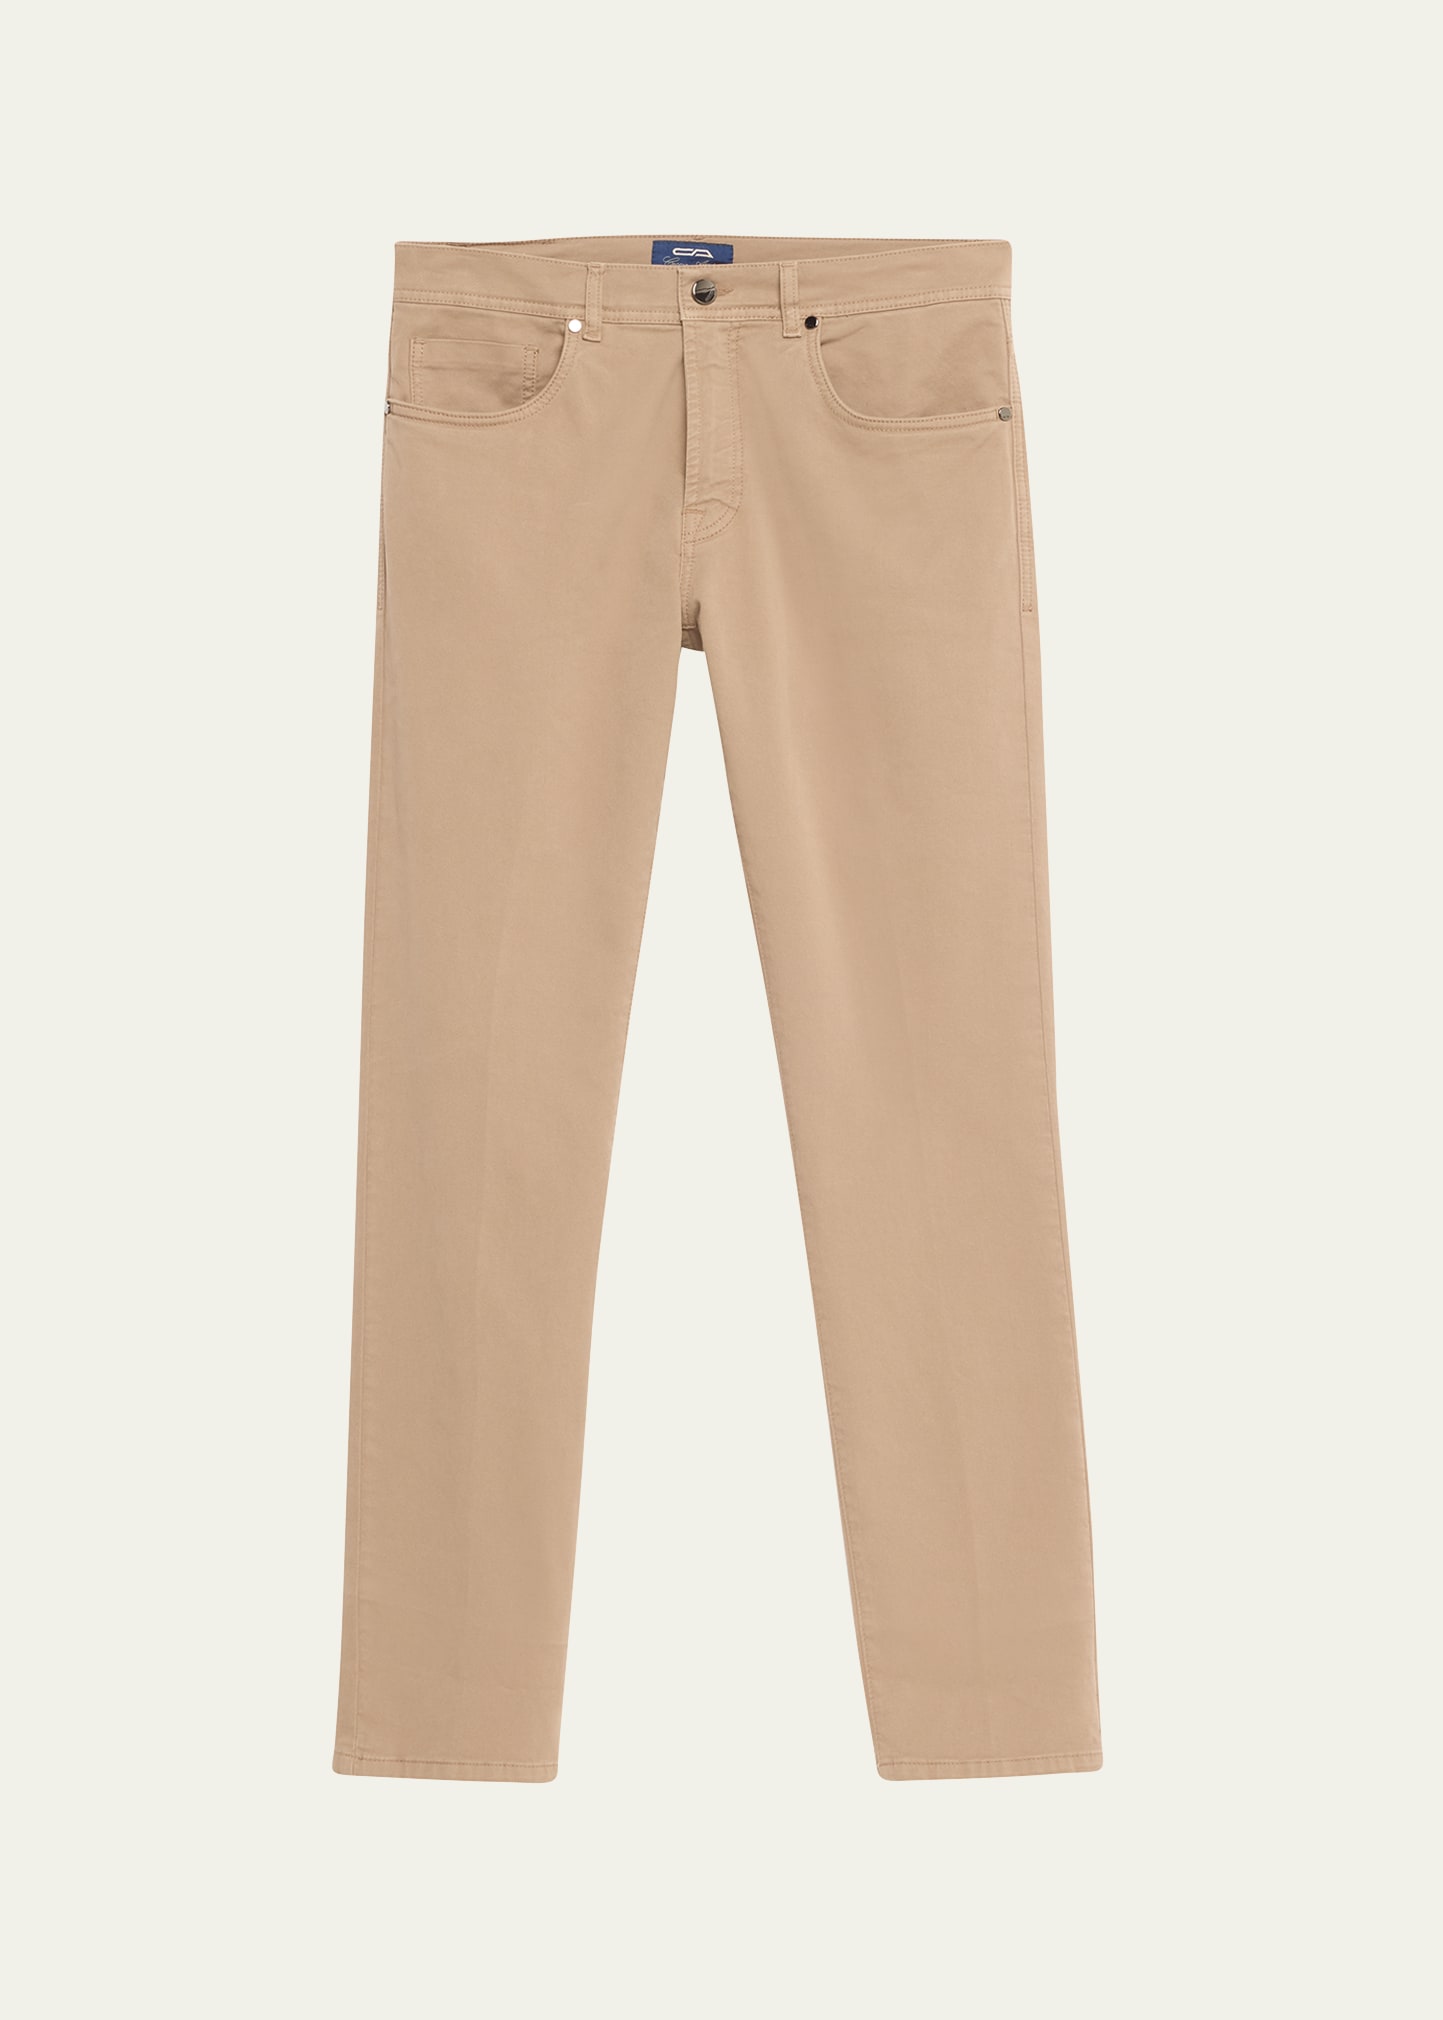 Cesare Attolini Men's Cotton-stretch Slim 5-pocket Pants In N21-nut